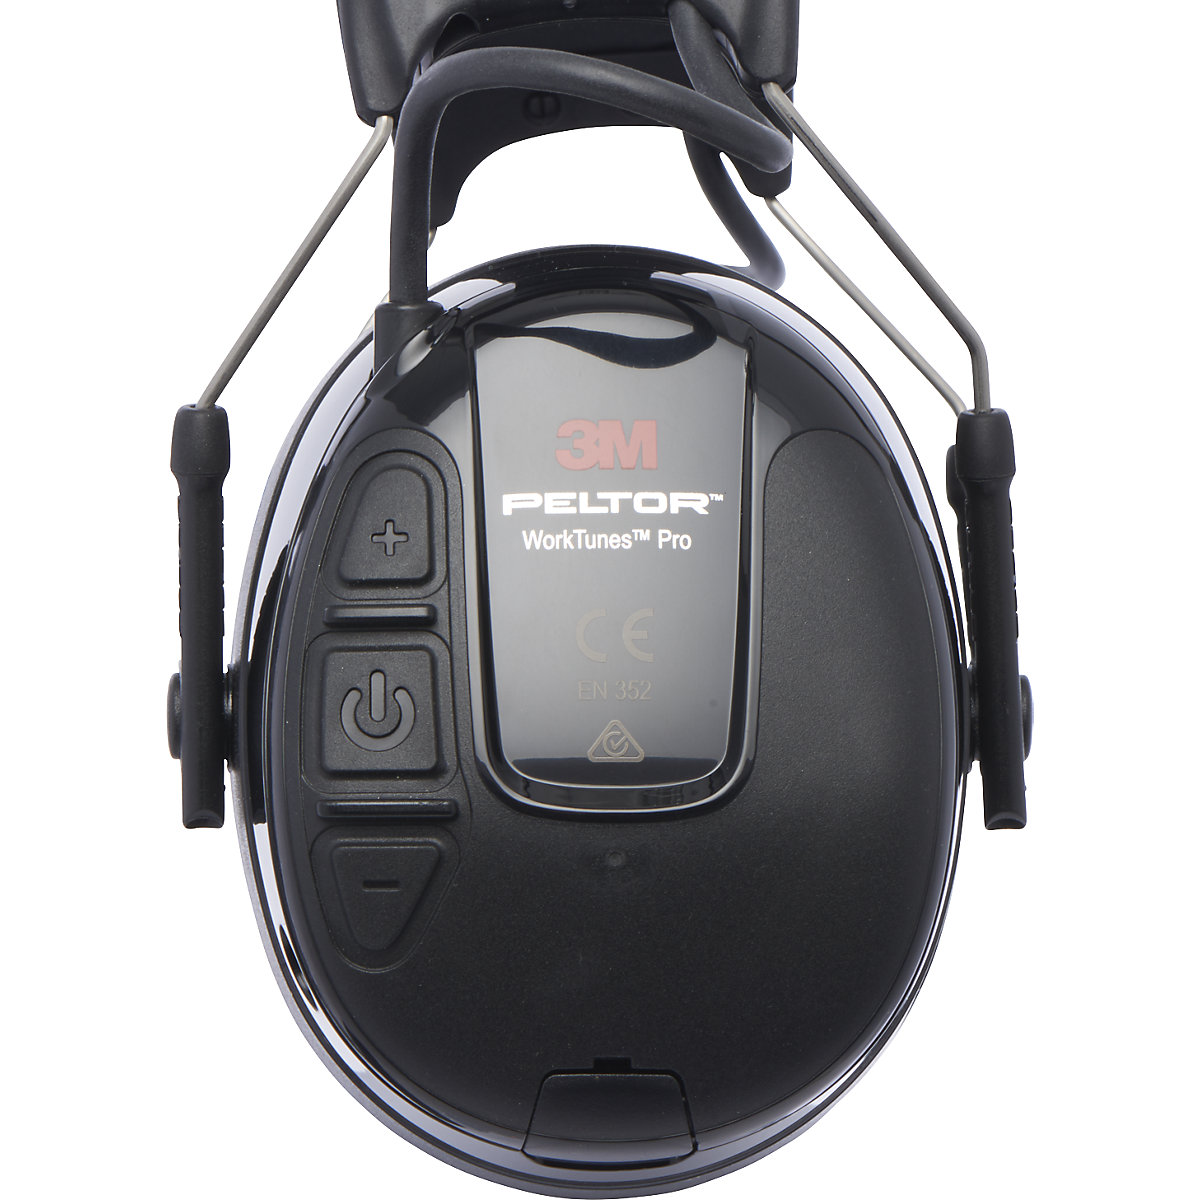 3M – PELTOR™ WorkTunes™ Pro FM radio headset: SNR 32 dB | KAISER+KRAFT